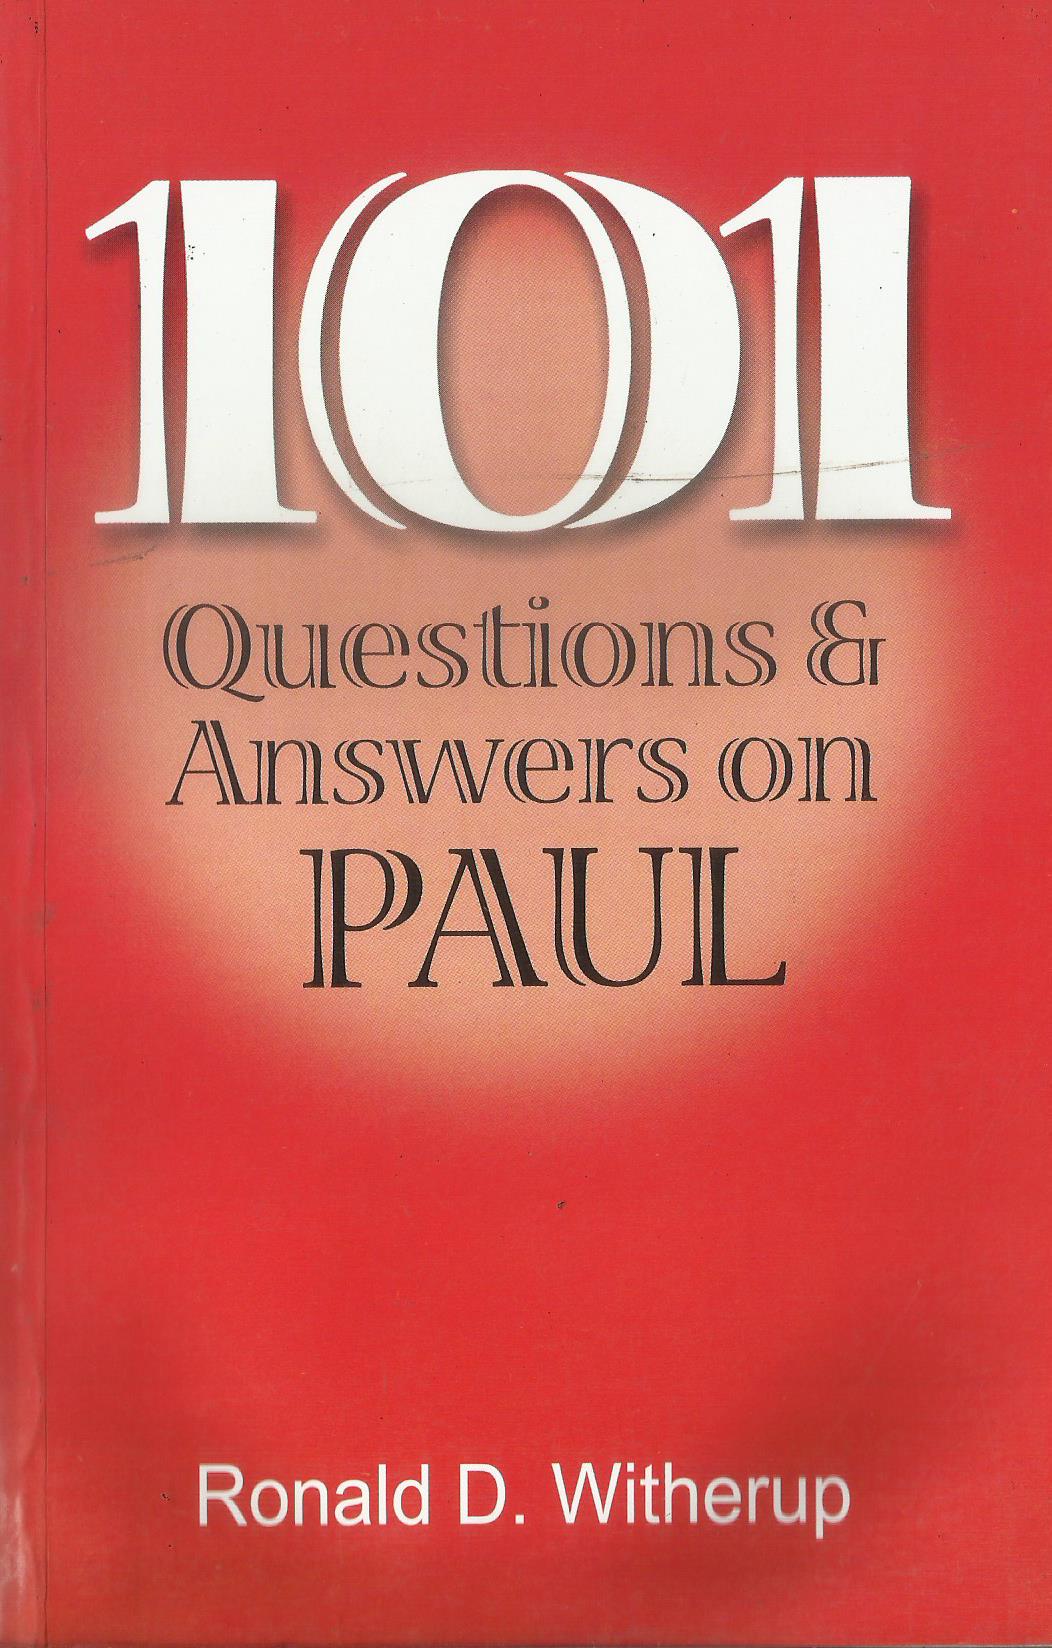 101 QUESTIONS ANSWERS ON PAUL - sophiabuy